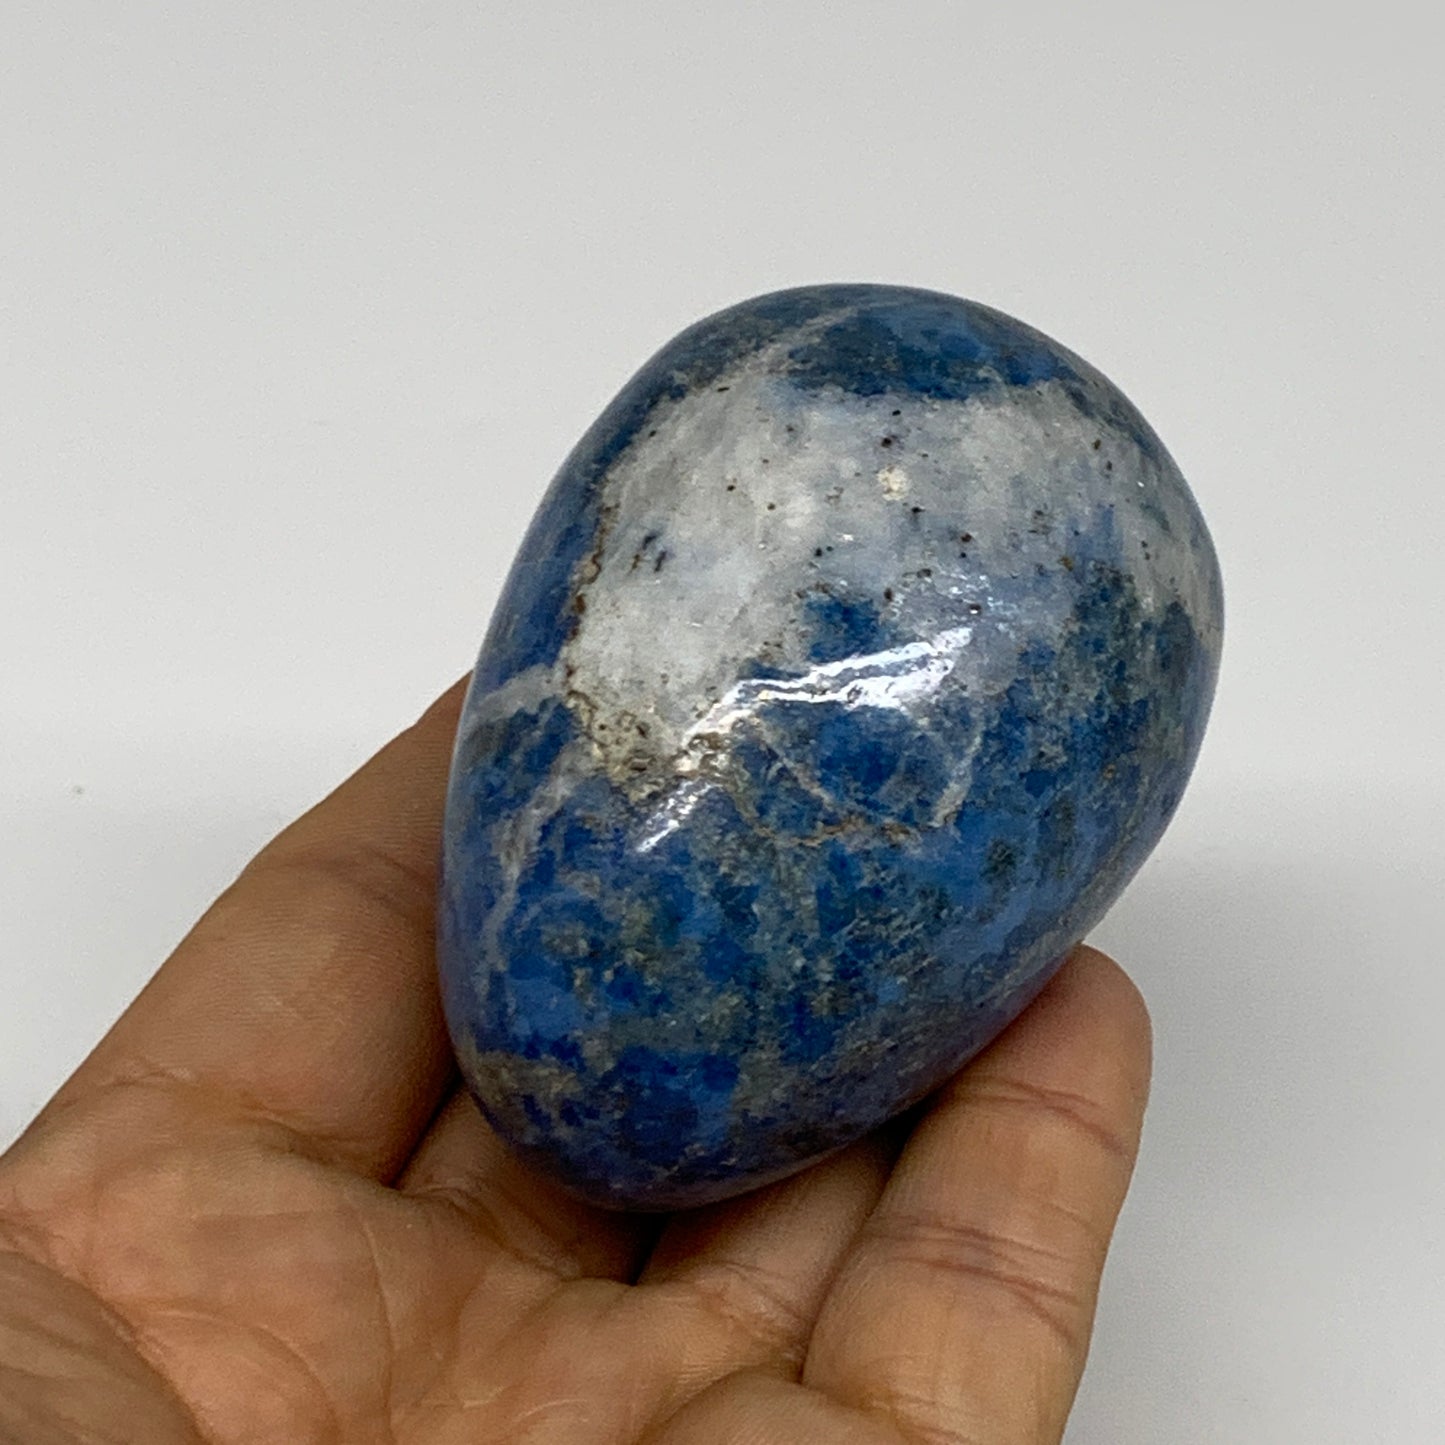 232.7g, 2.6"x1.9", Natural Lapis Lazuli Egg Polished, Clearance, B33363